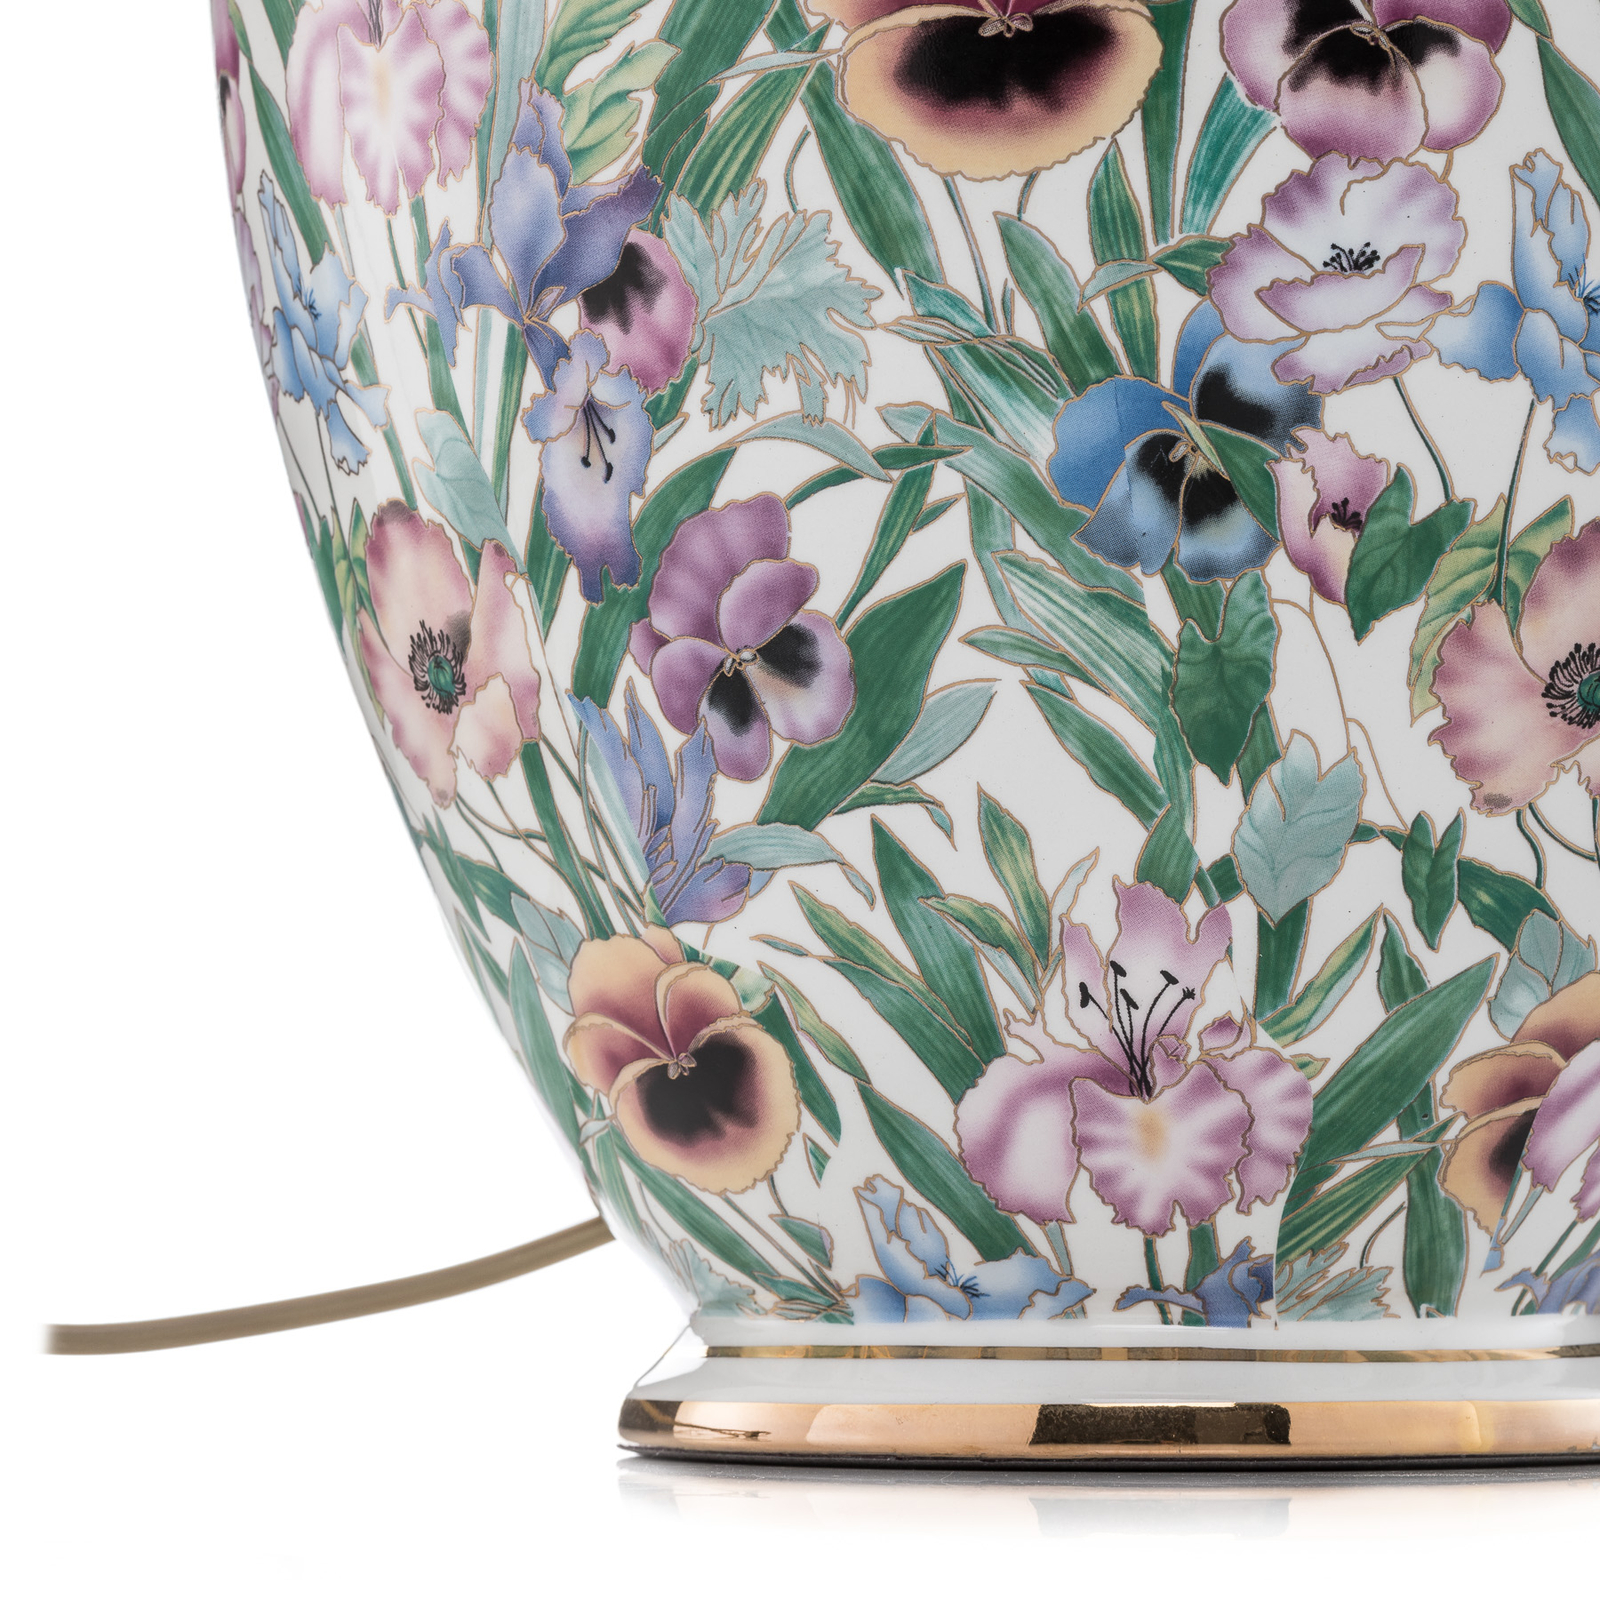 KOLARZ Giardino Panse - lampe à poser florale 50cm